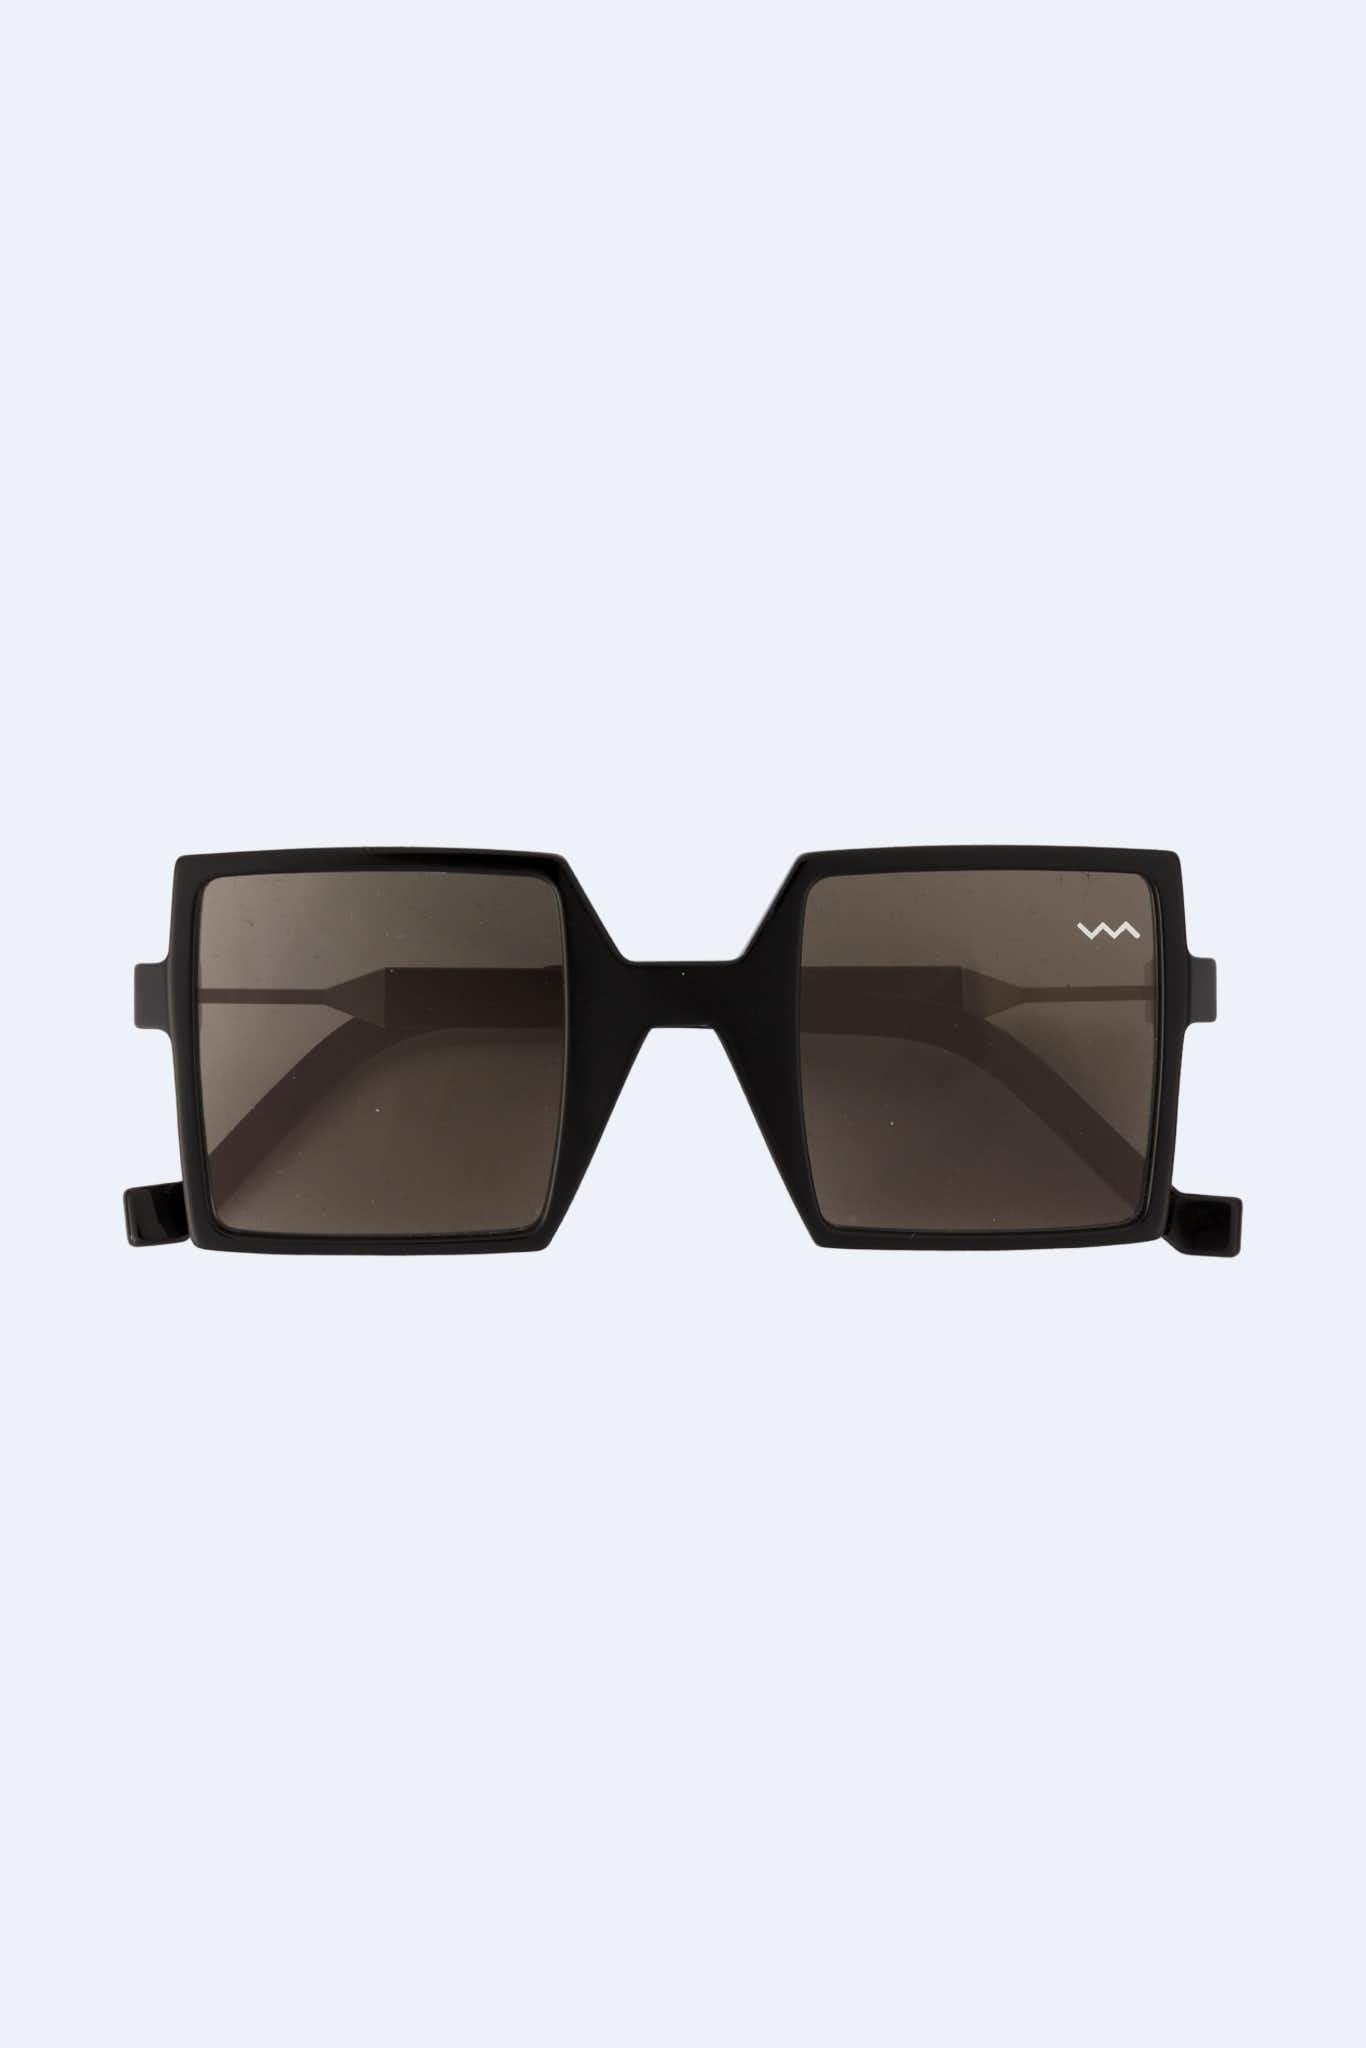 1366x2048 Black Square Sunglasses - Glass Reflection PNG